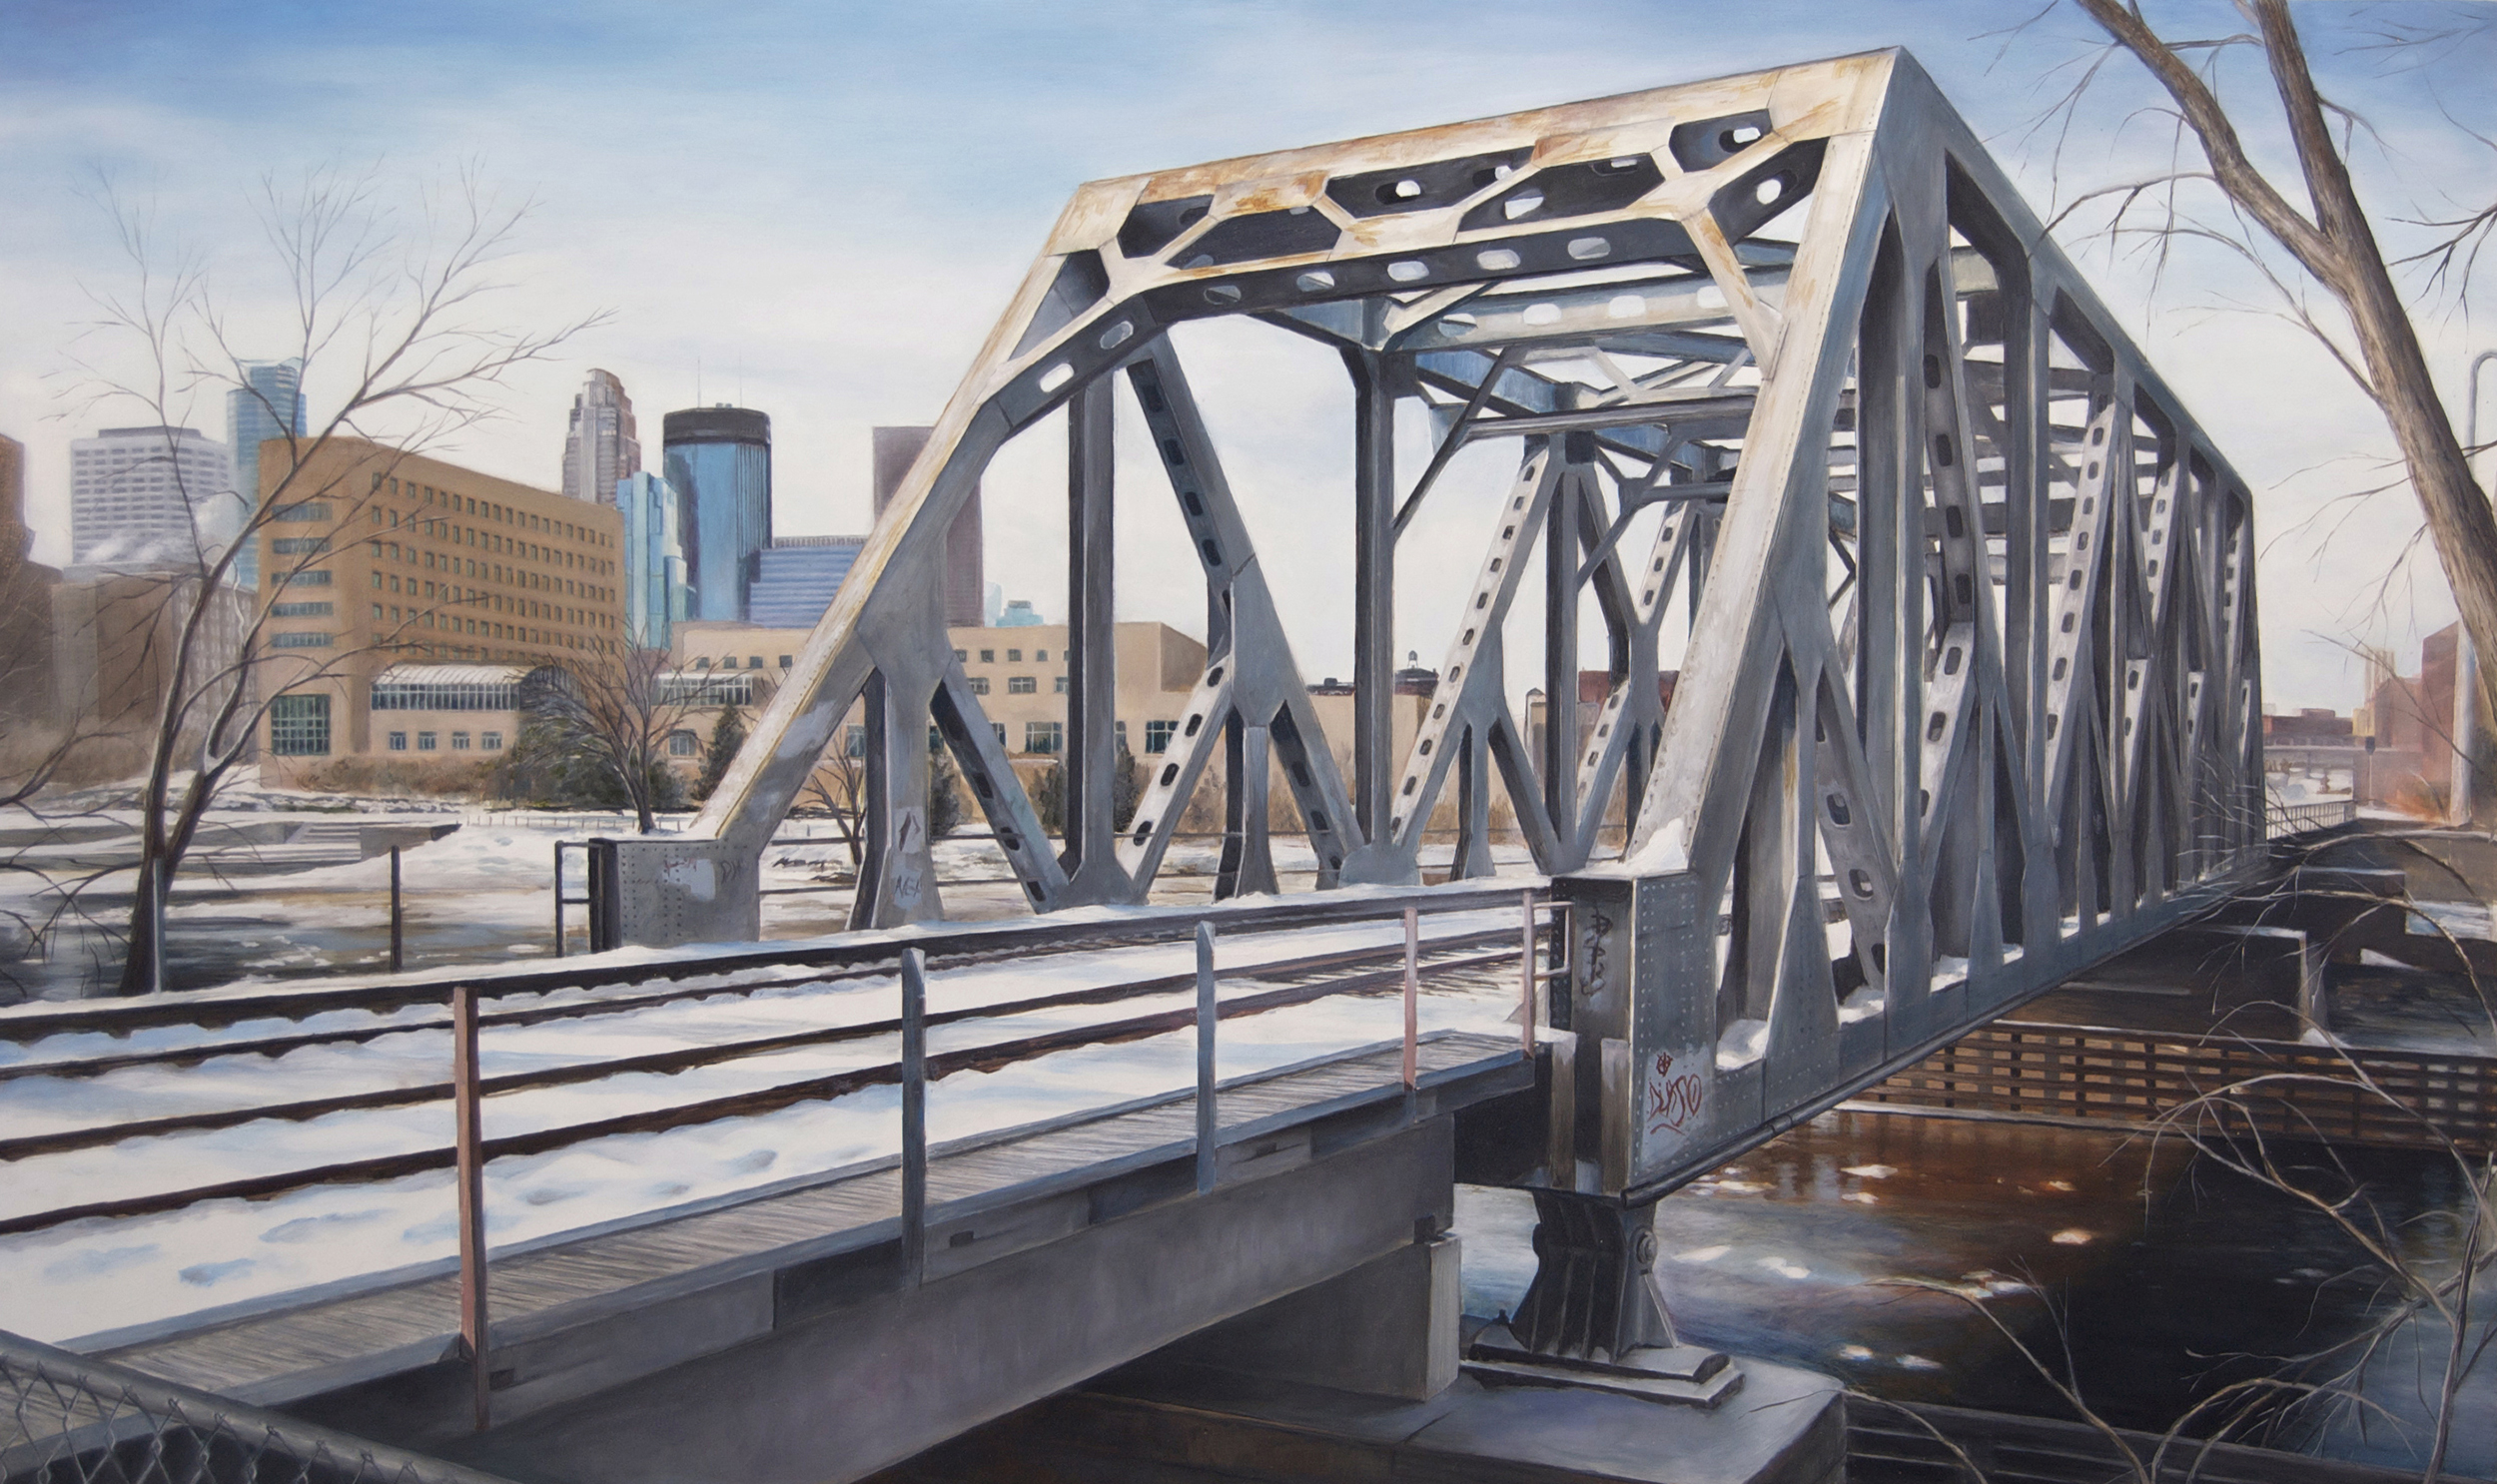   Railroad Bridge at    West Island Avenue   2014  Oil on panel  21.75 x 36 inches    